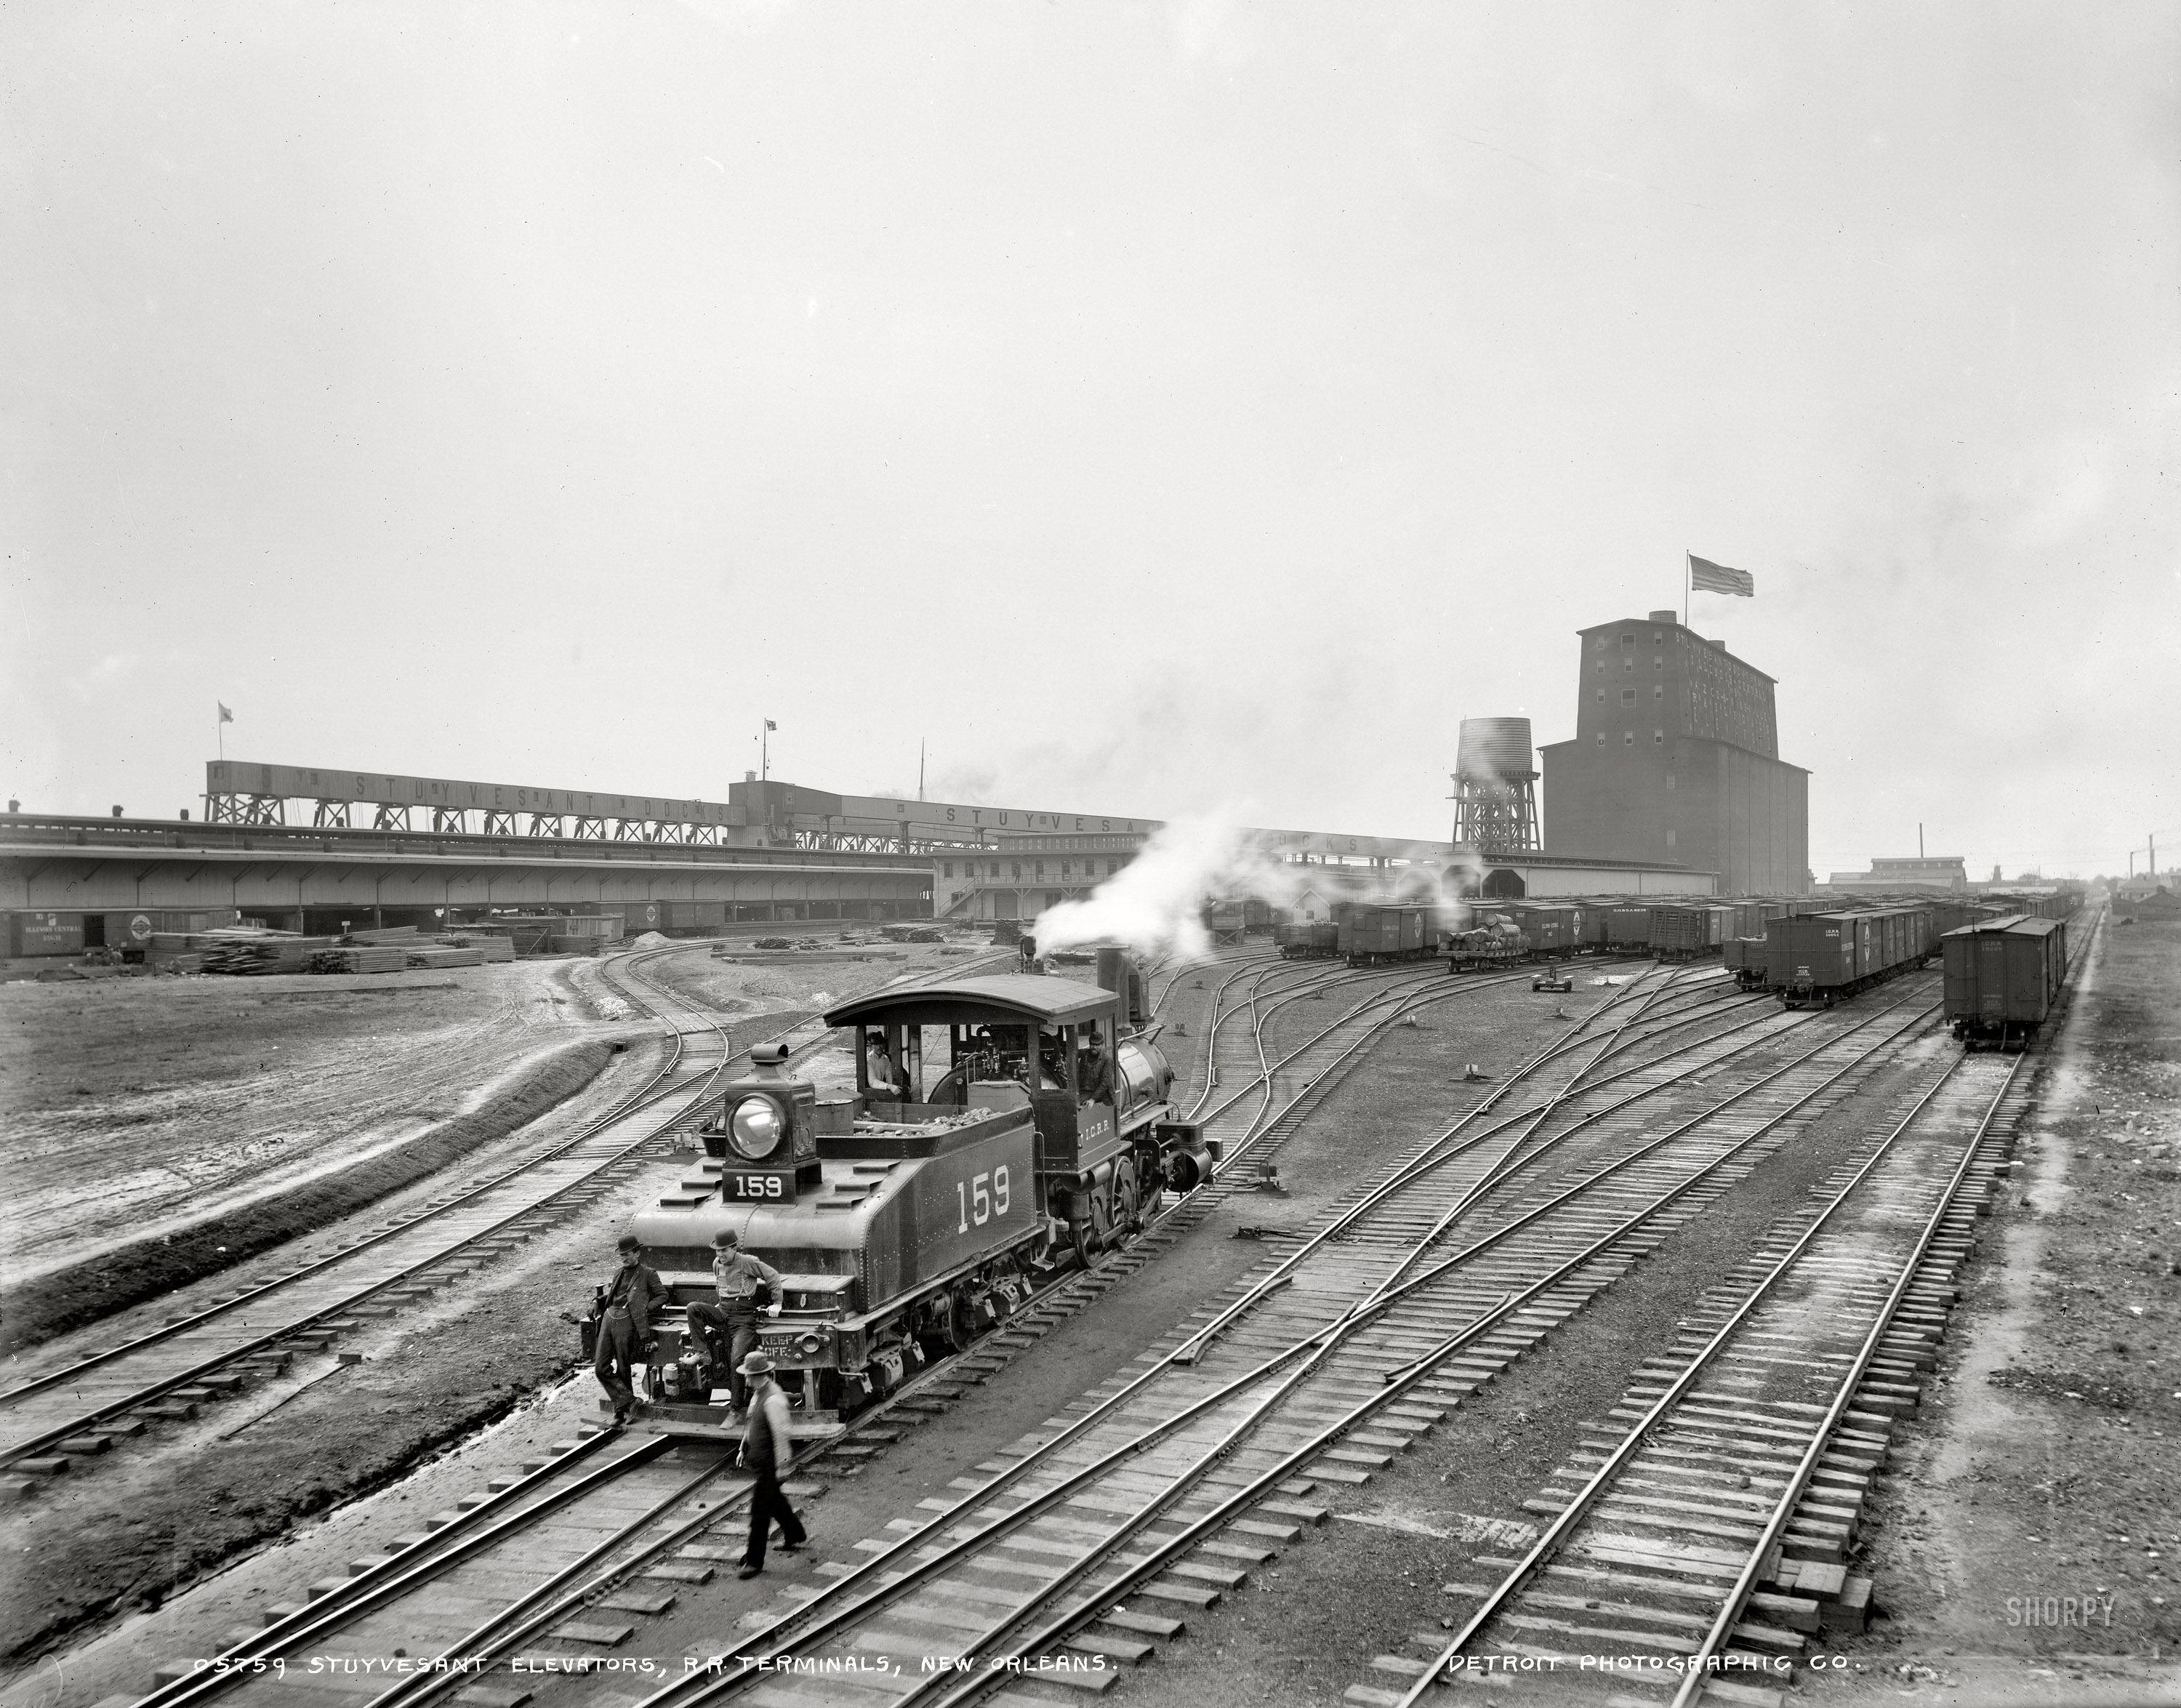 Louisiana circa 1900. "Stuyvesant elevators, docks, R.R. terminal at New Orleans." Detroit Publishing Company glass negative. View full size.